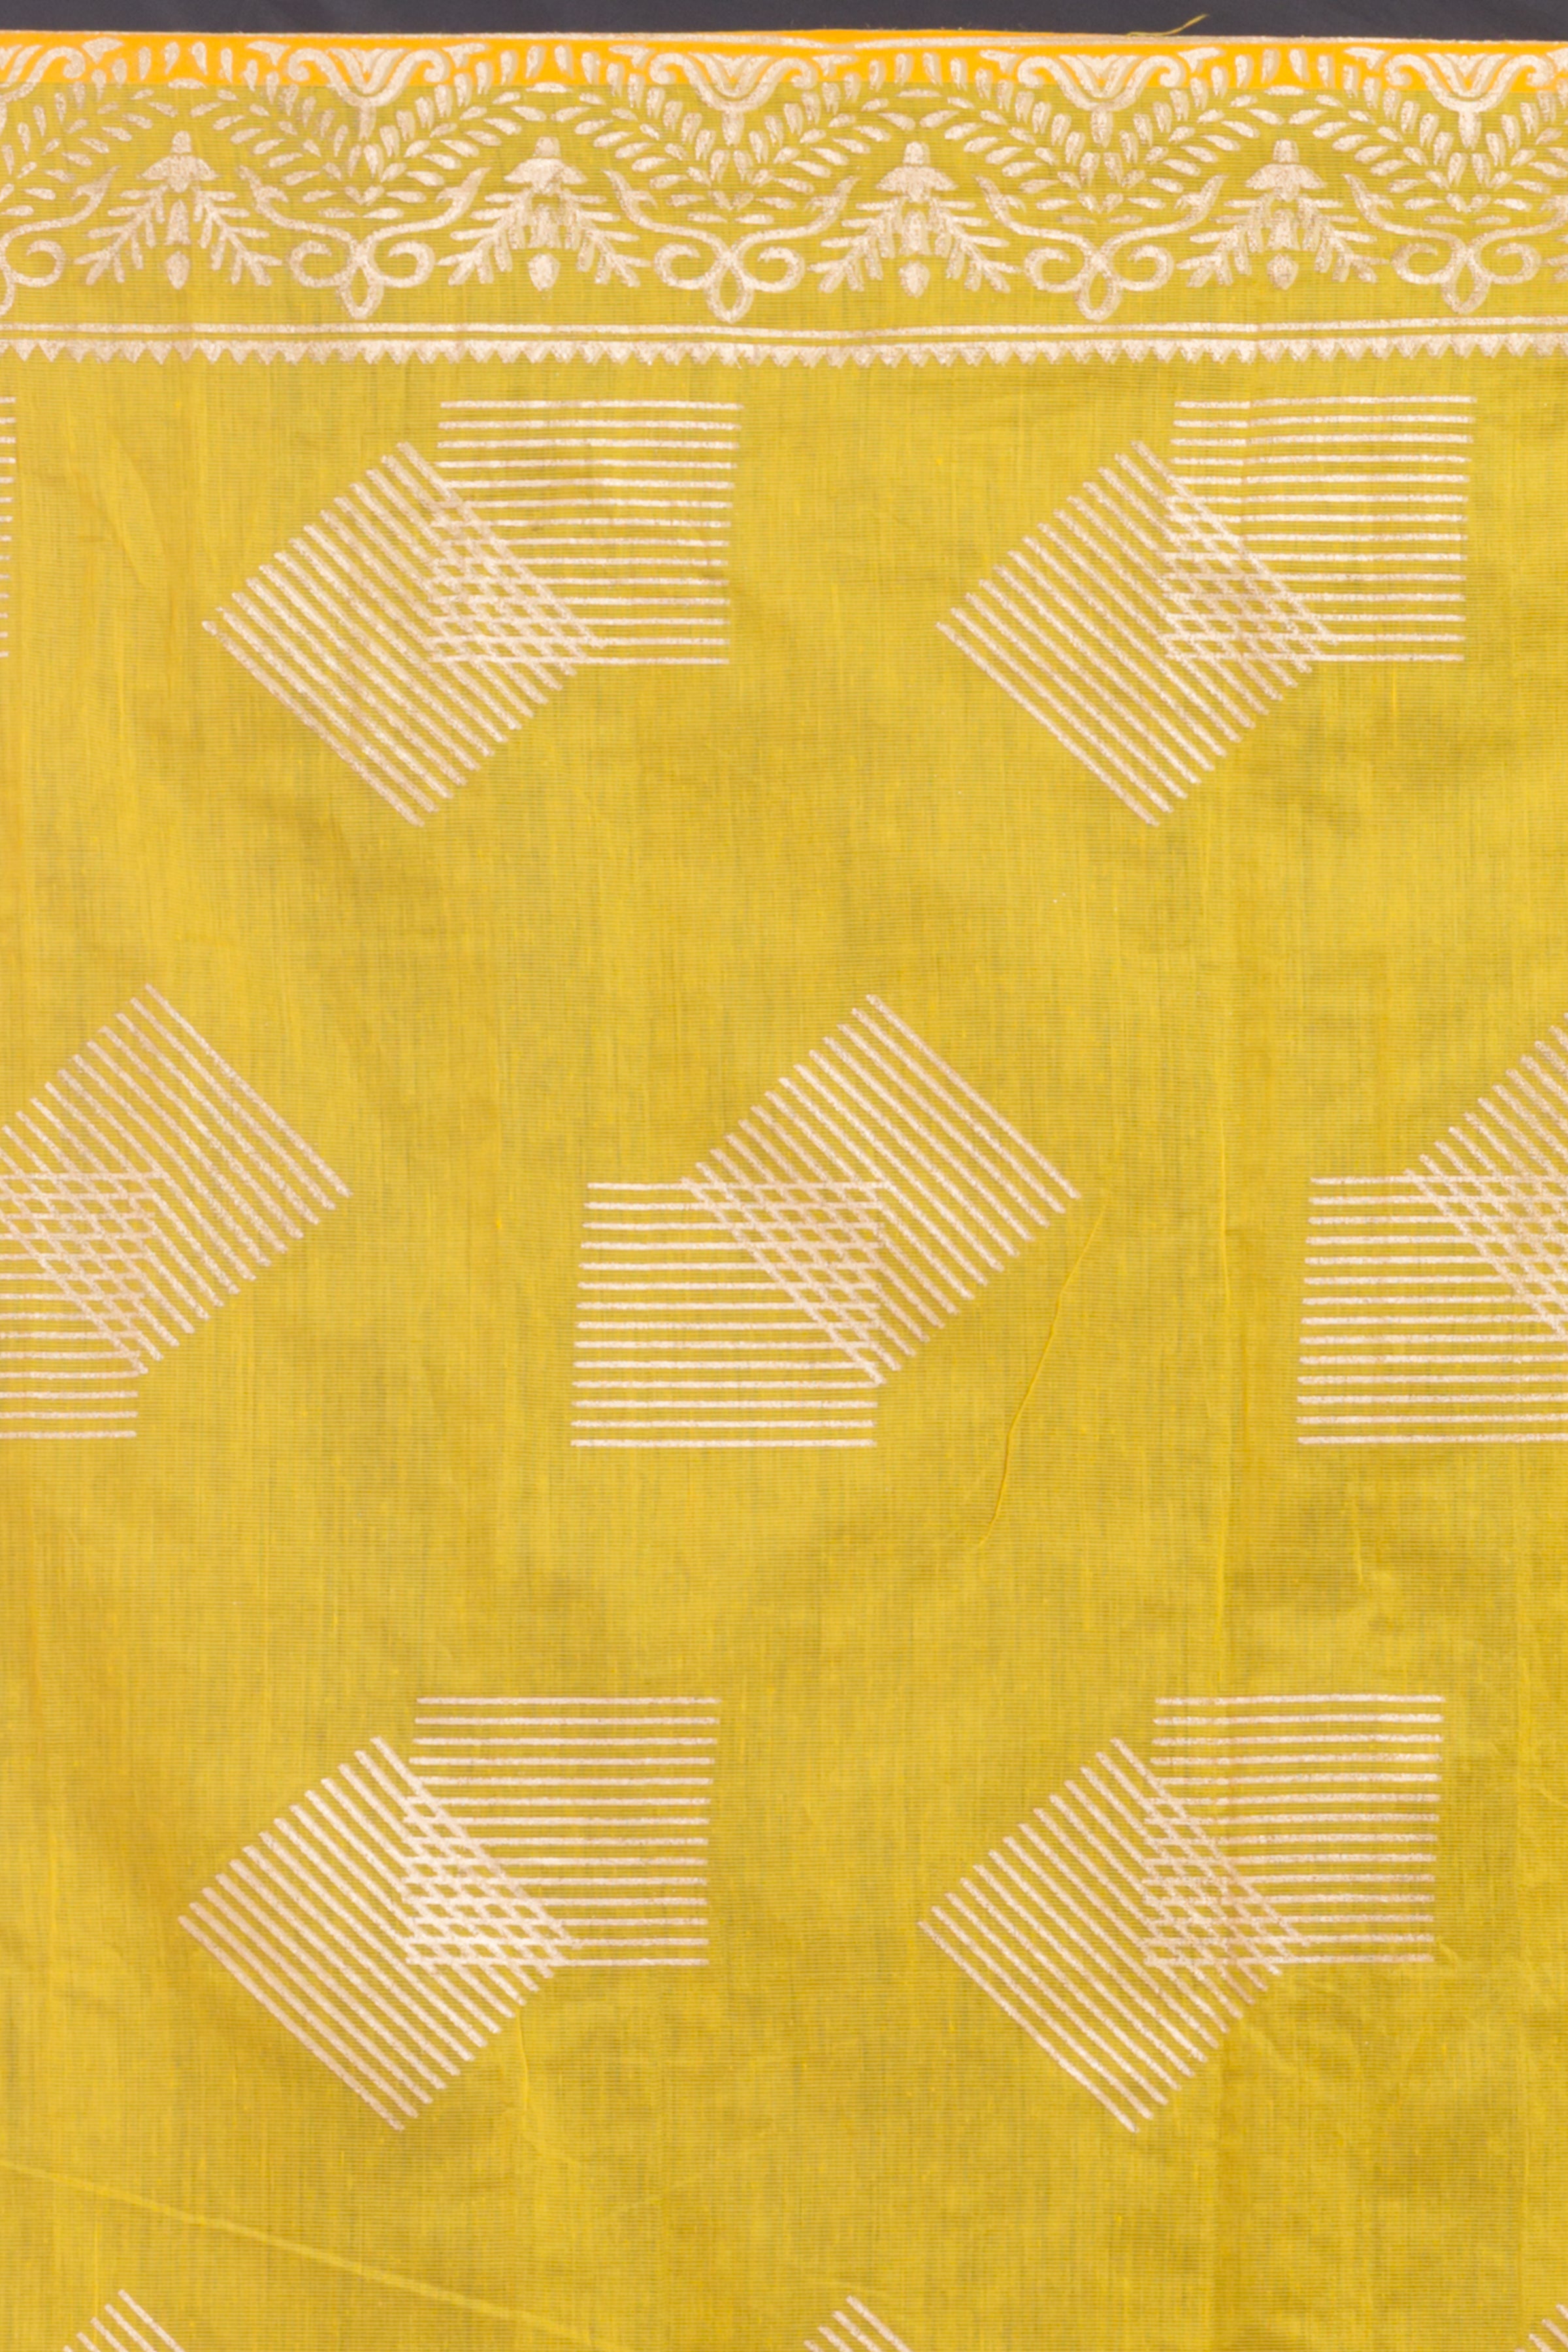 Women's Yellow Hand Woven Cotton Silk Printed Saree - Piyari Fashion